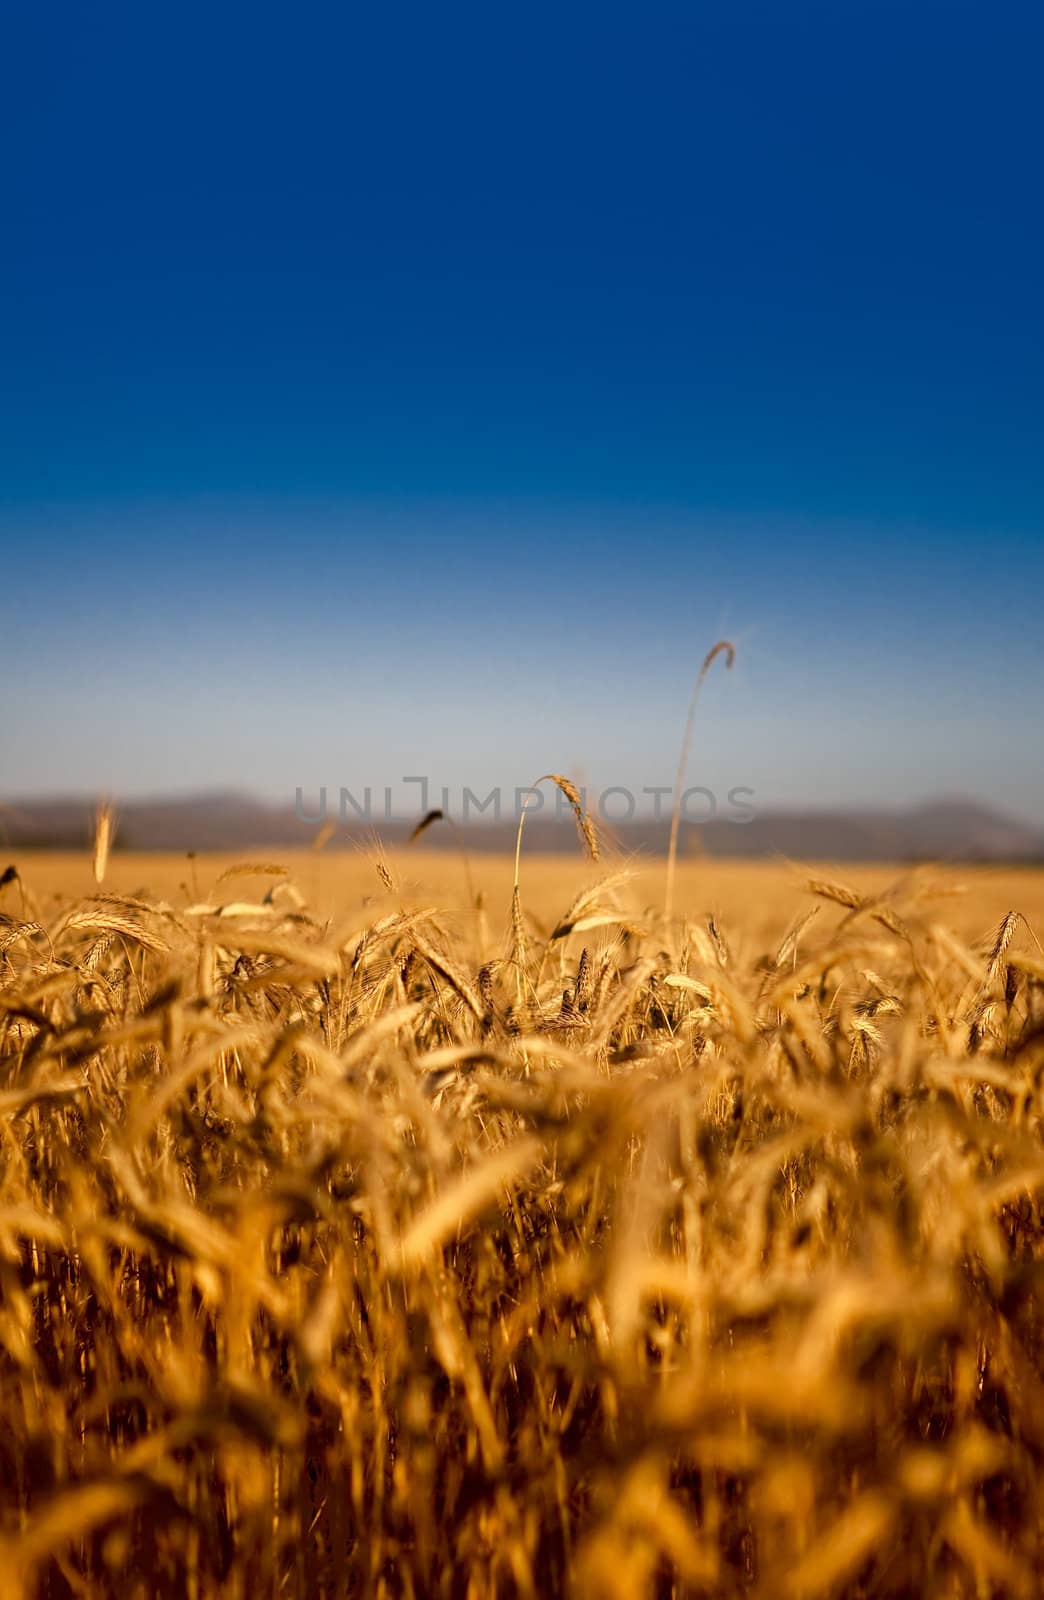 Beautiful landscape image of a wheat field